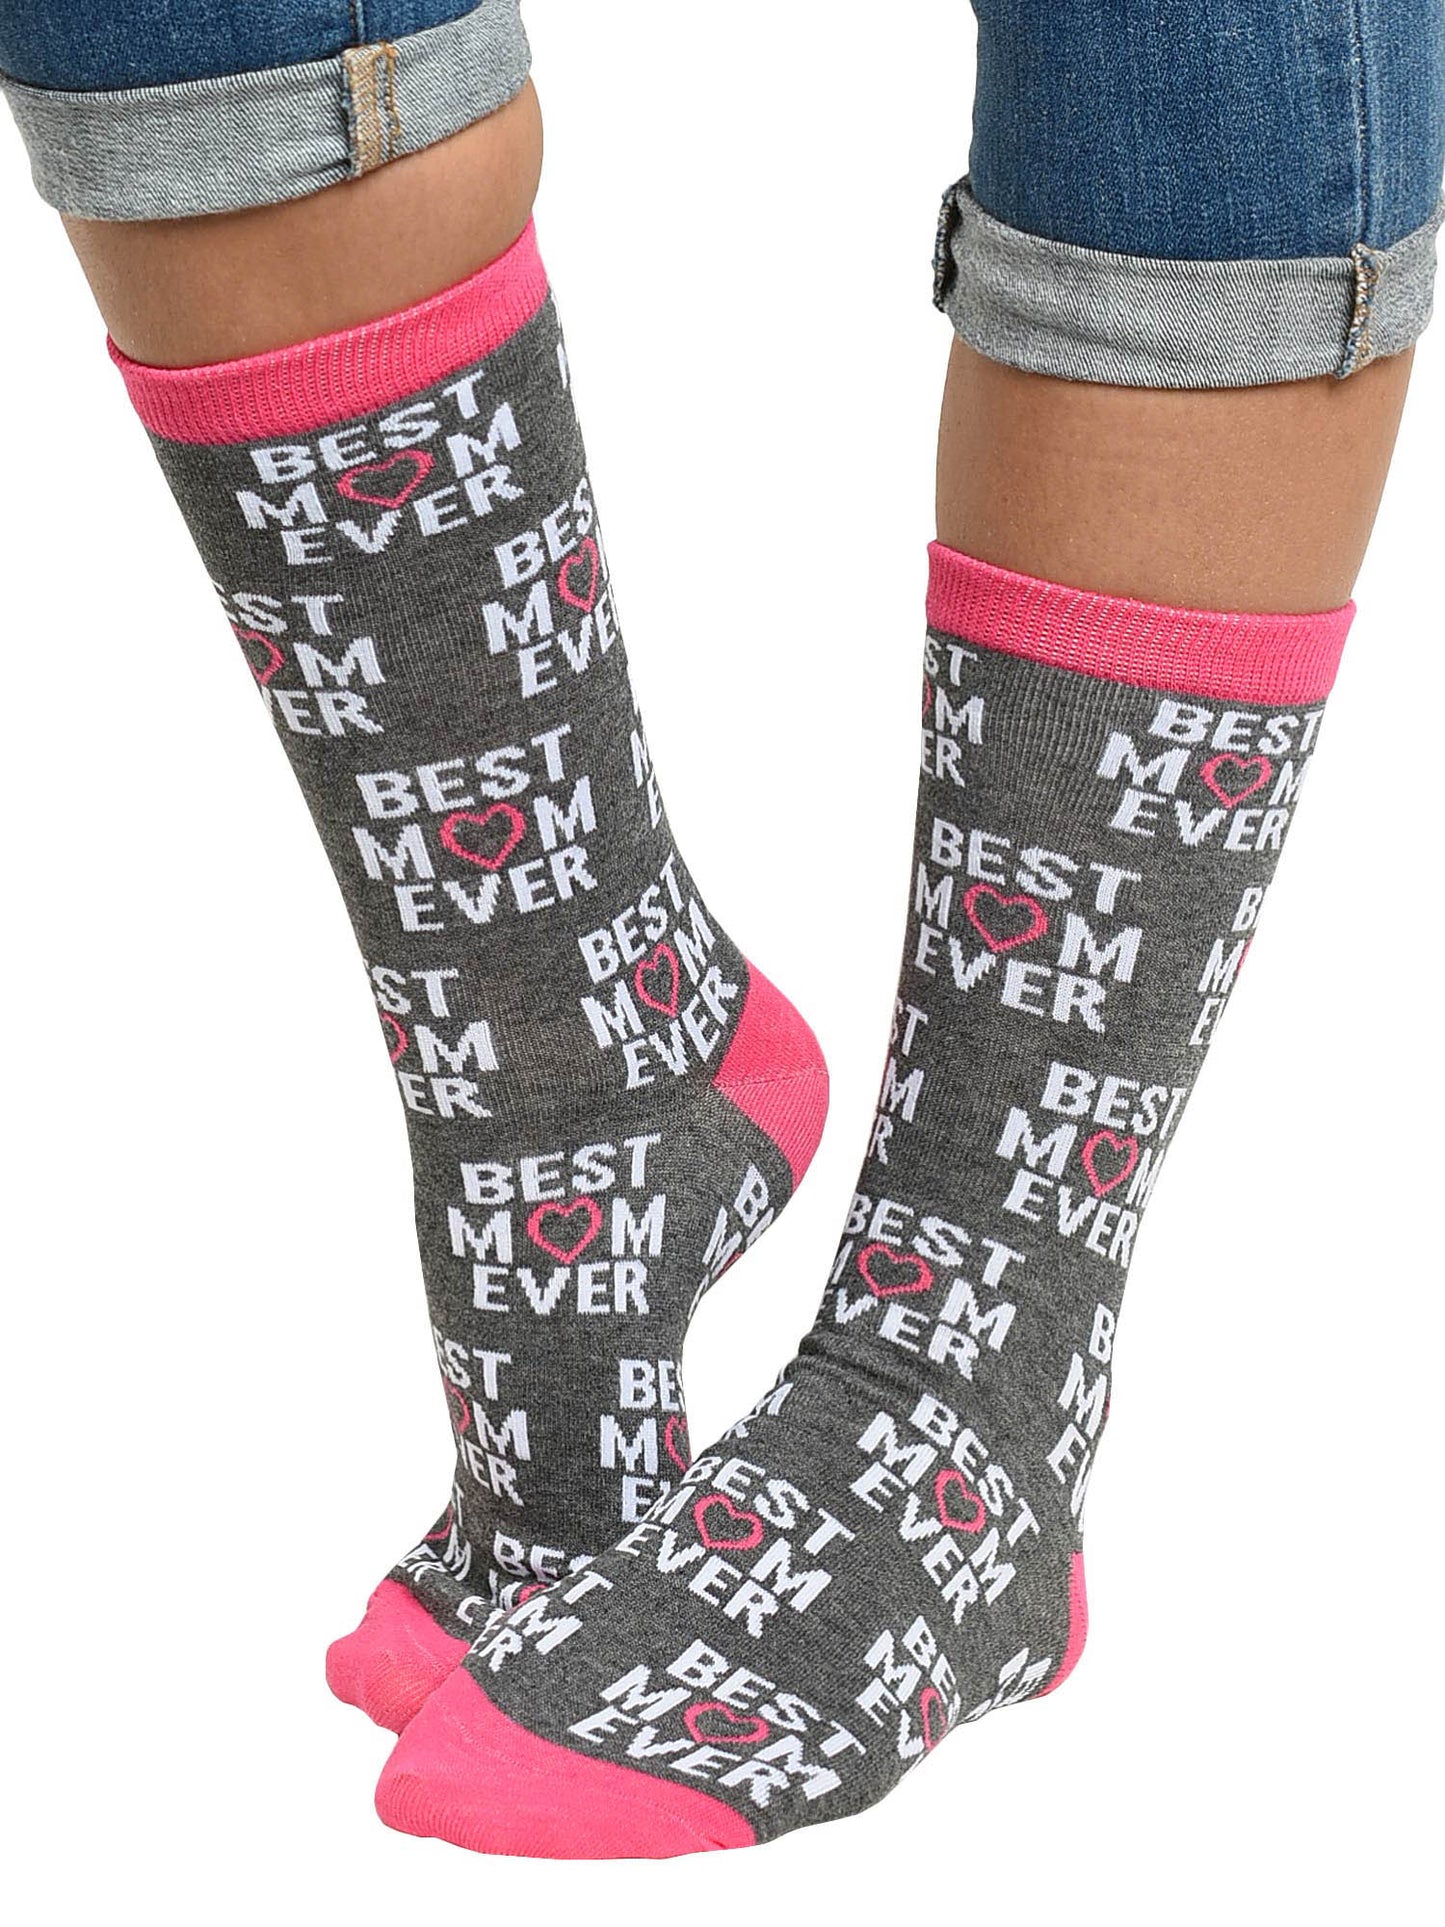 Women's Best Mom Ever Socks All-Over Print Novelty Crew Pink Gray